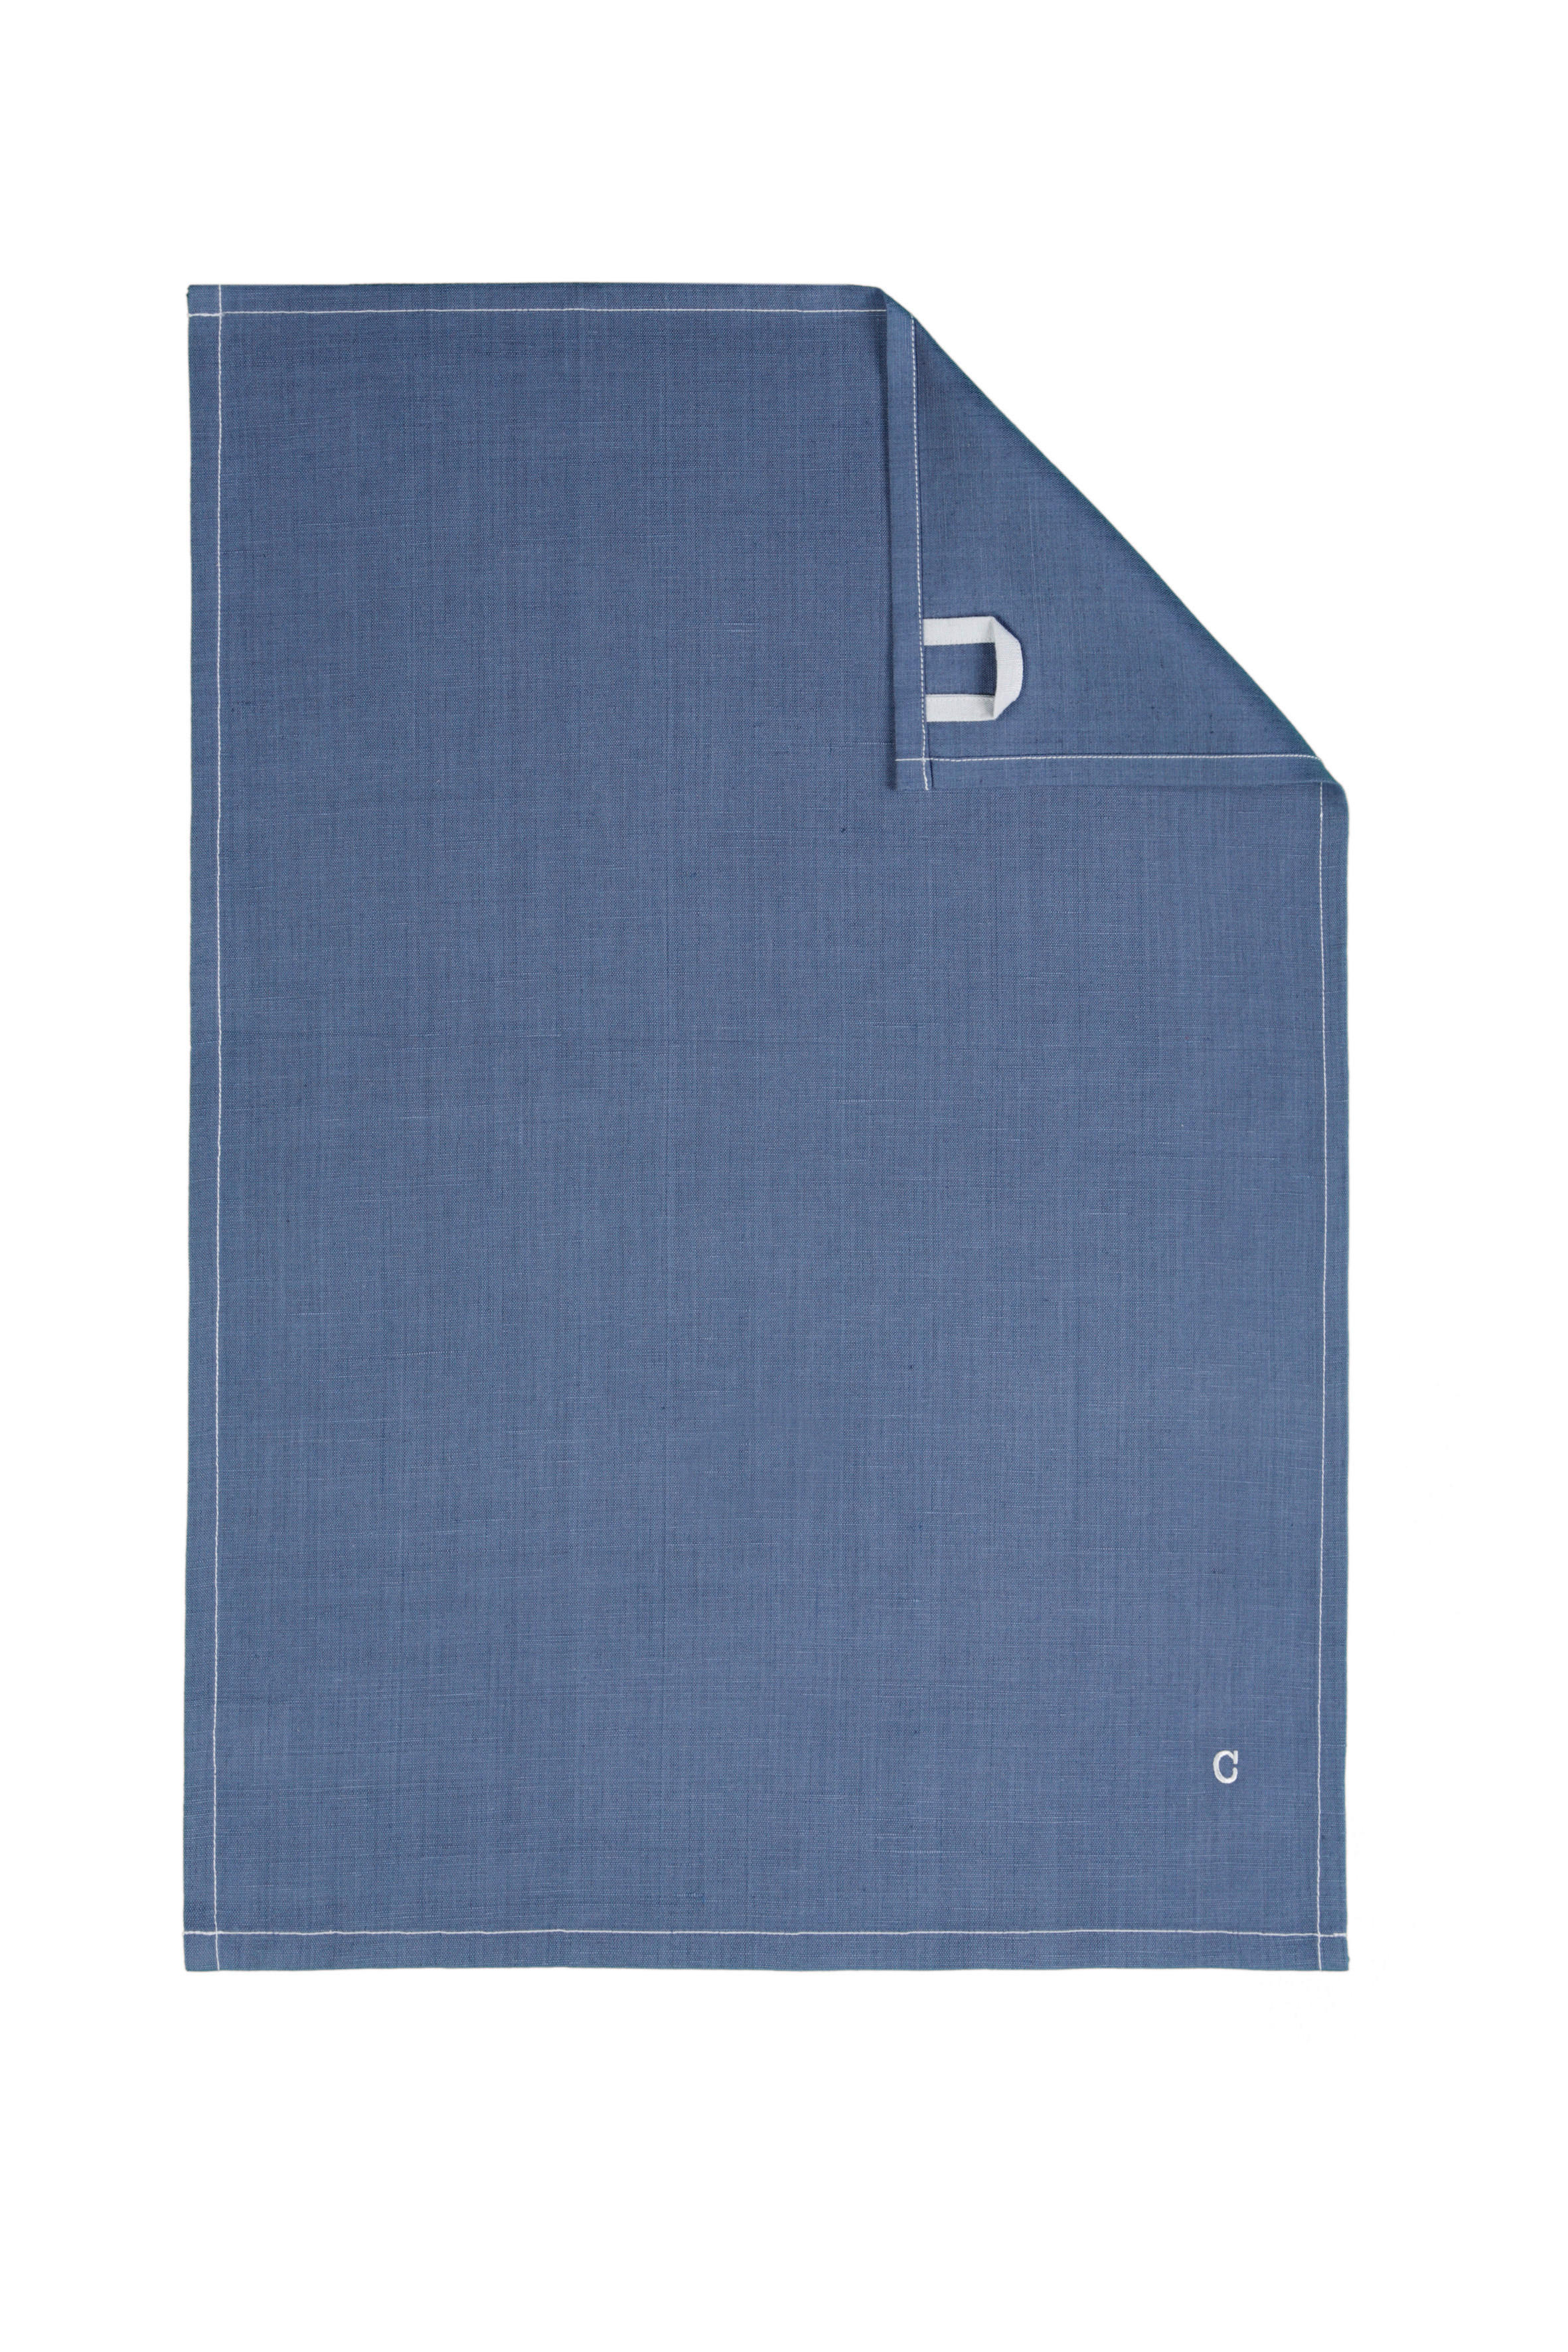 GESCHIRRTUCH Blau  - Blau, Basics, Textil (50/70cm) - Cawoe